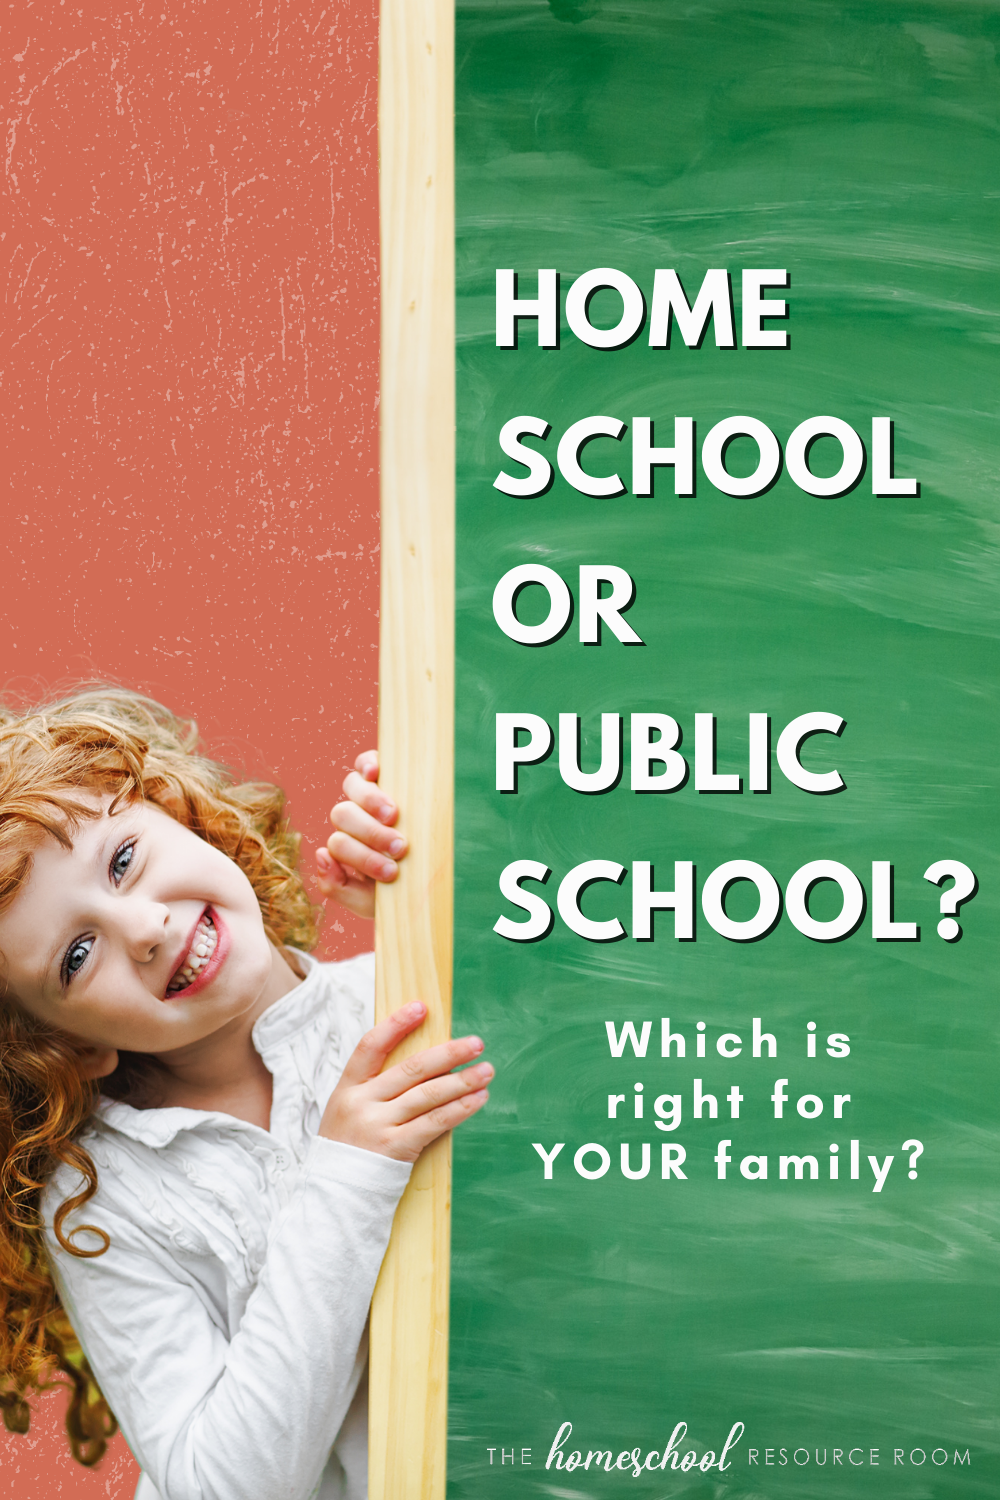 Homeschooling vs Public School: What's Best for Your Child?